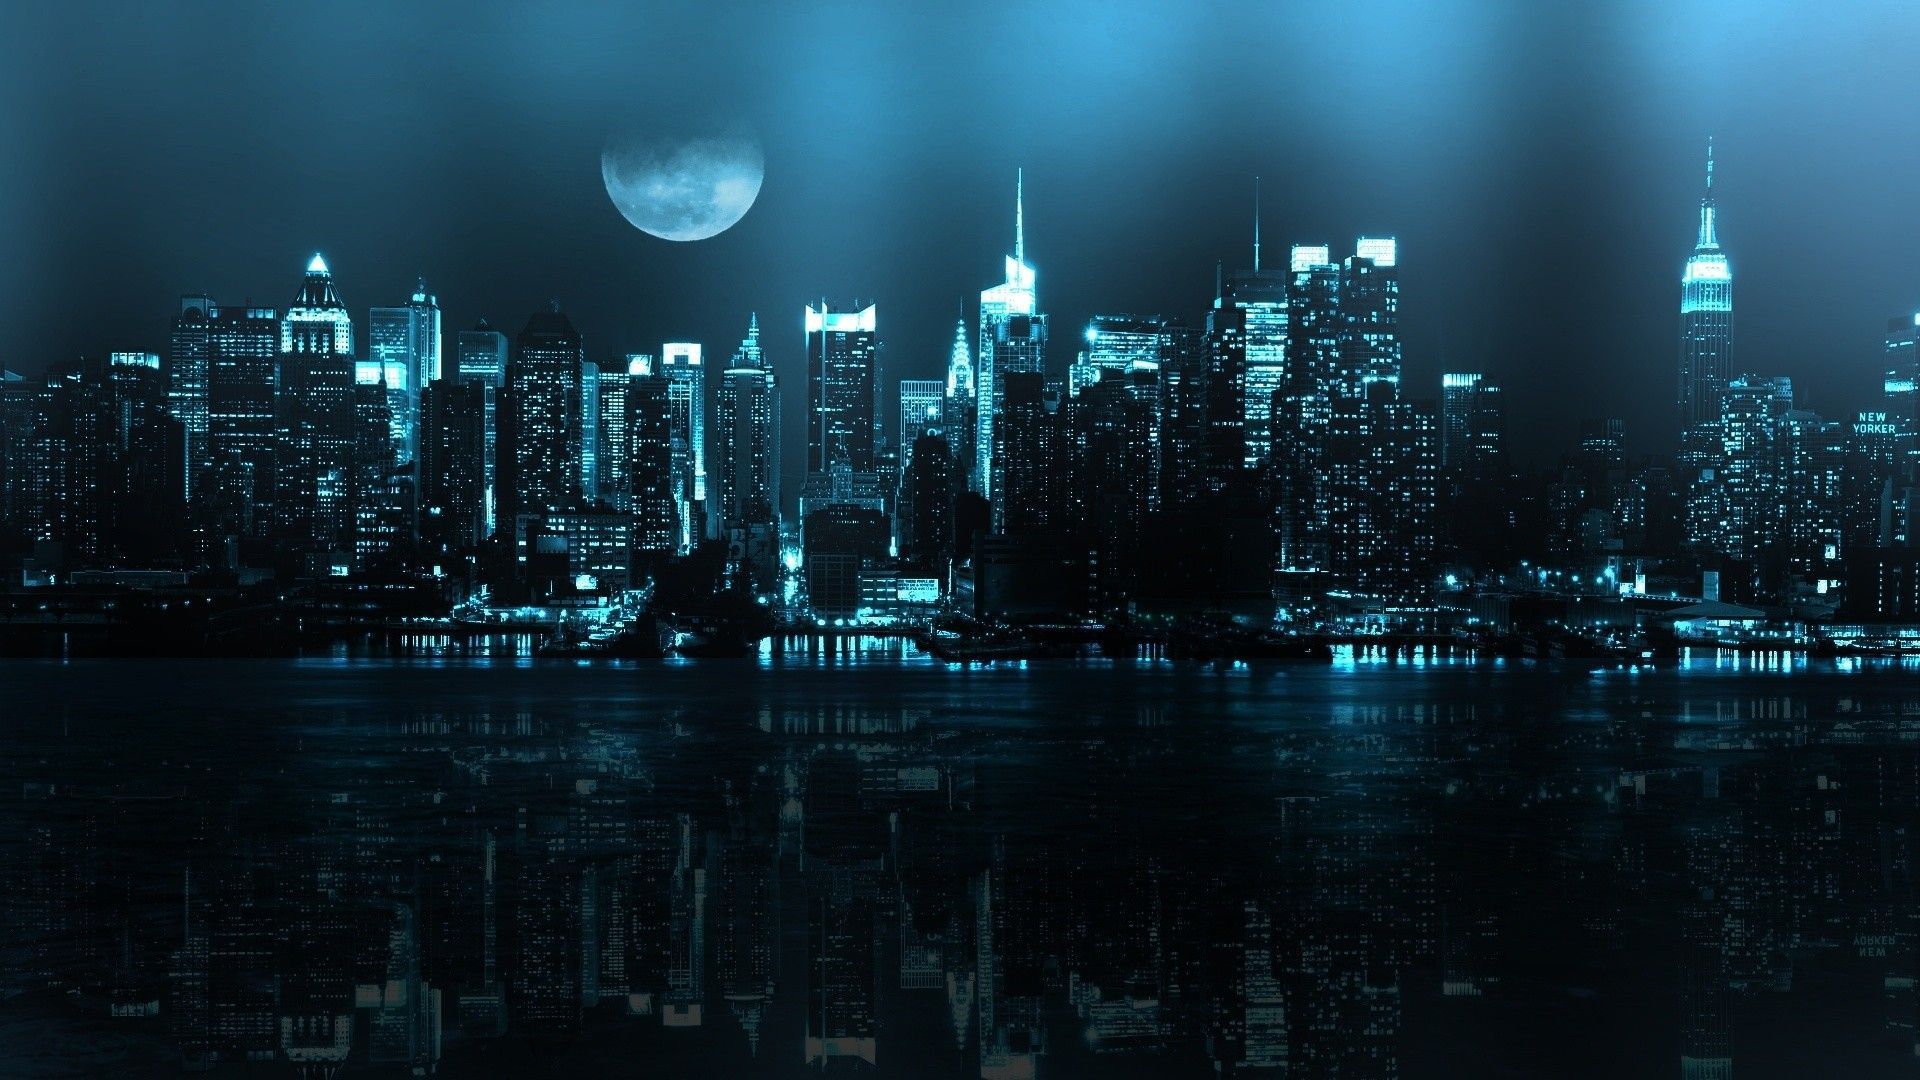 Night City Wallpaper Image Free Download. Papel de